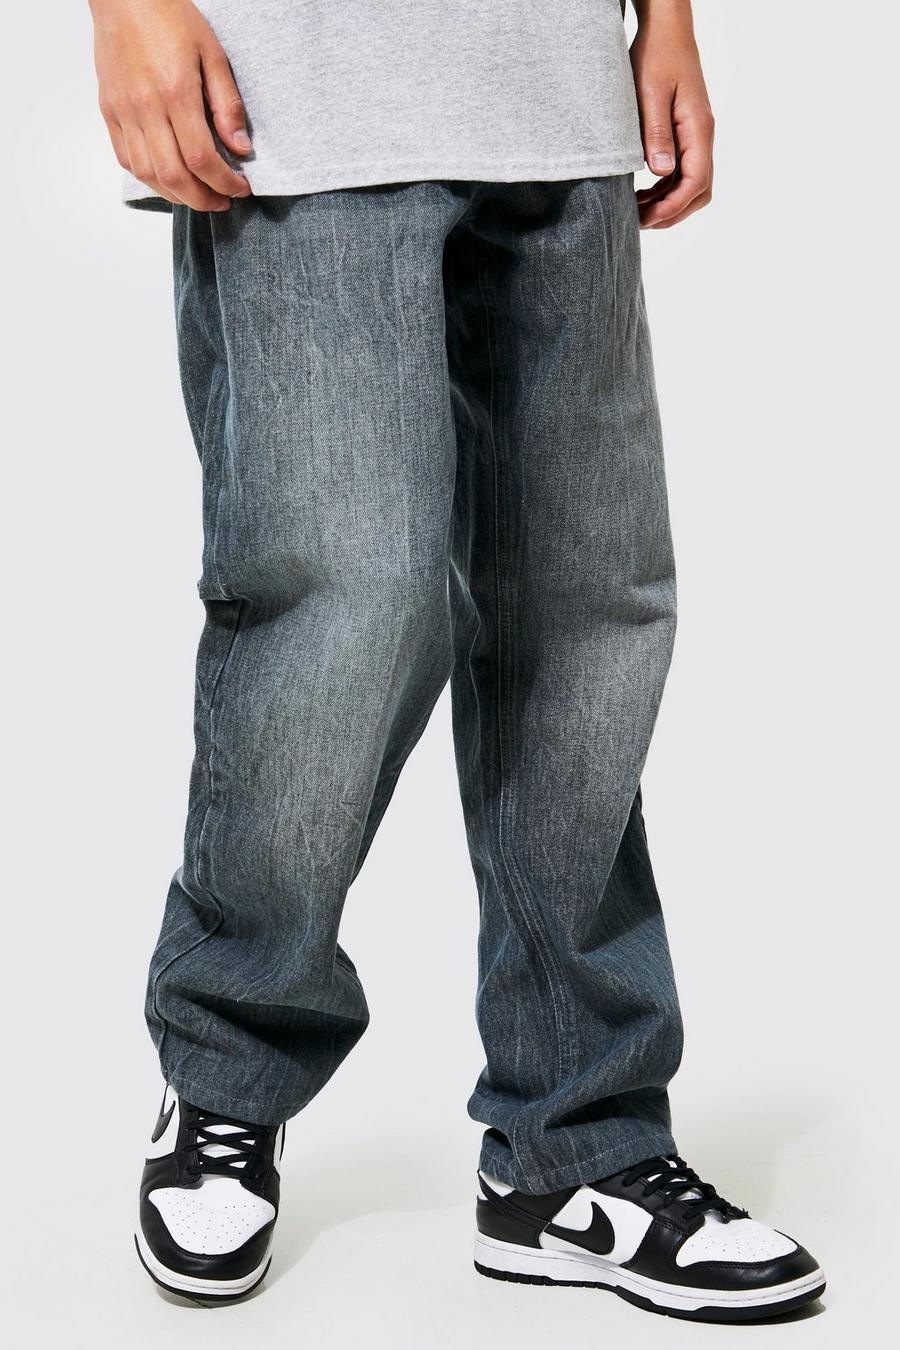 loose fit jeans for men